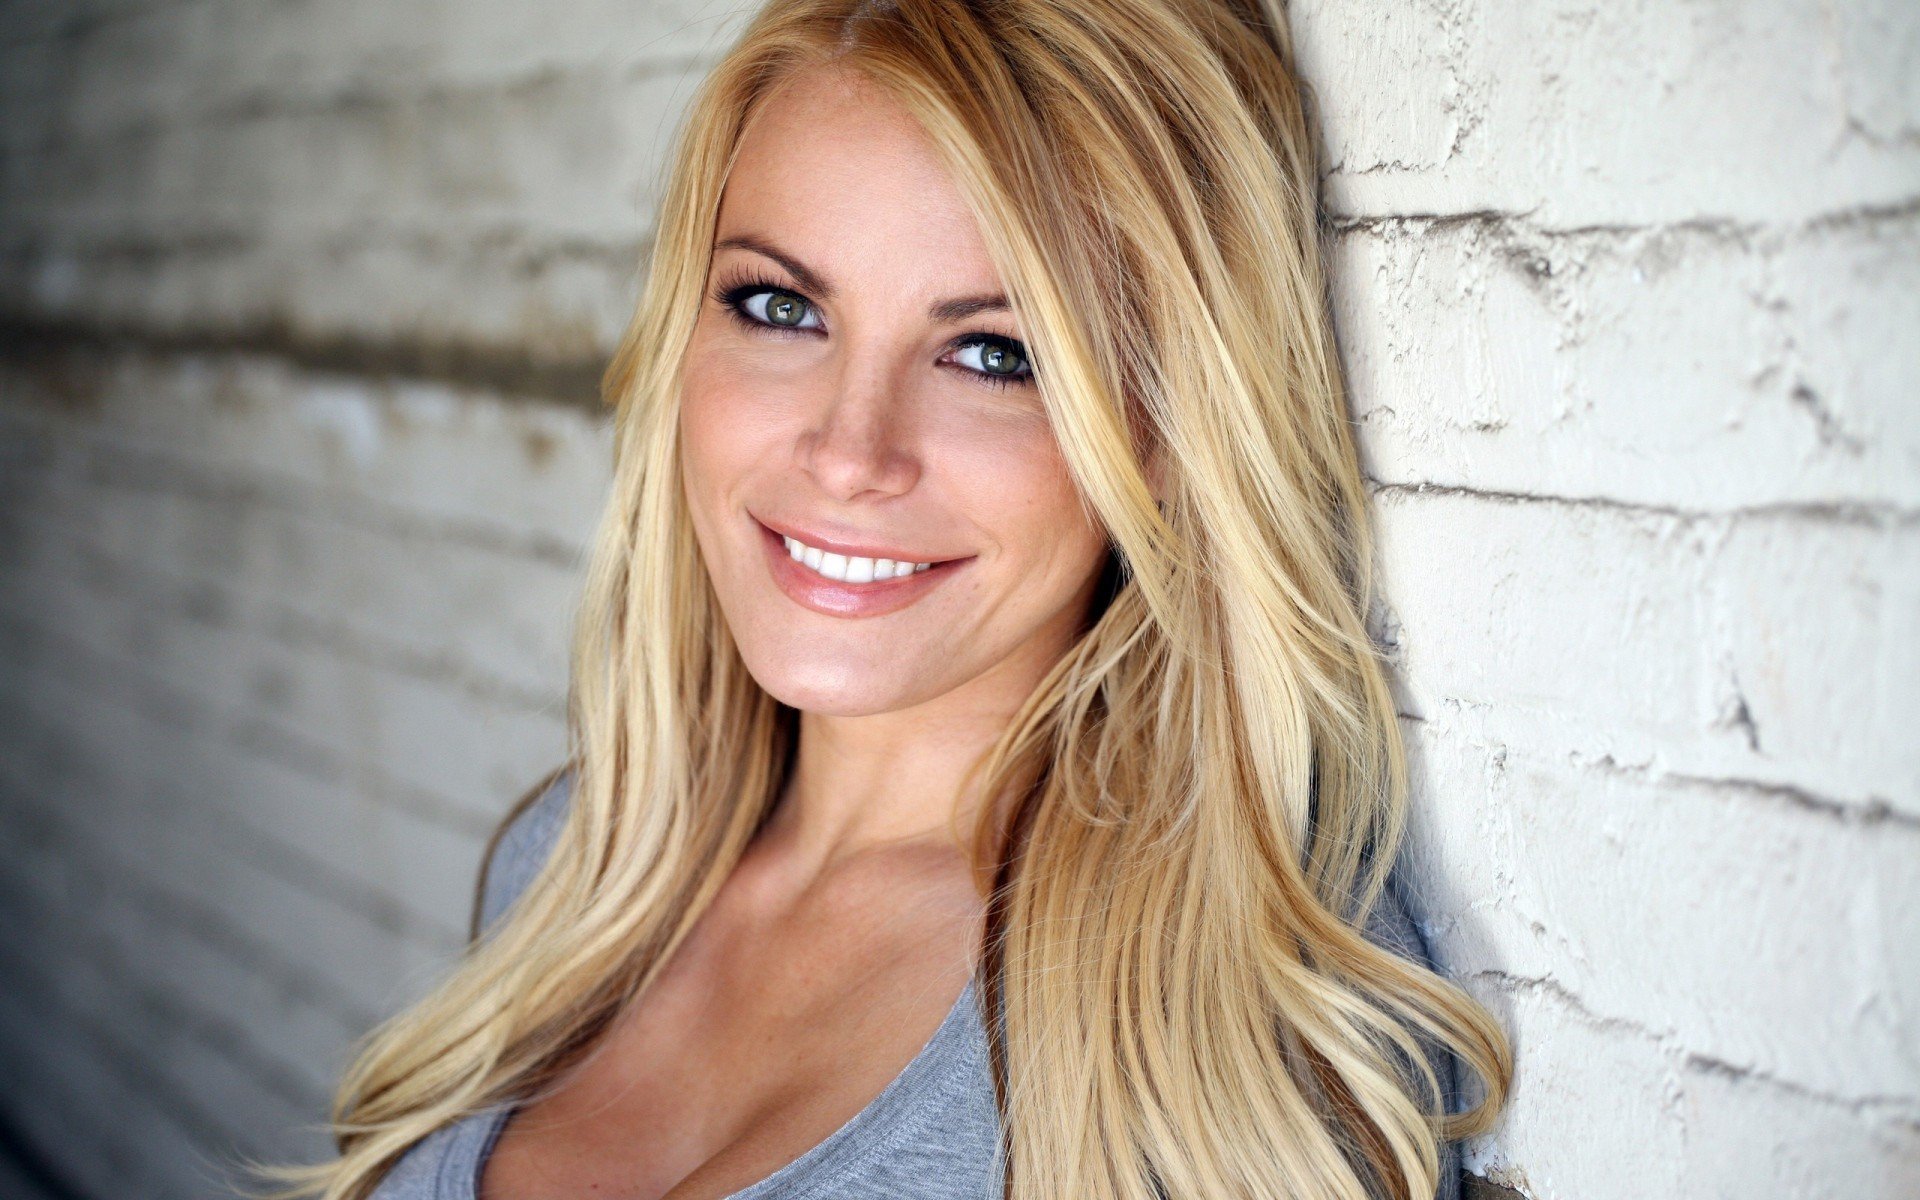 Pretty blonde girl smiling wallpaper download. Wallpaper, picture, photo